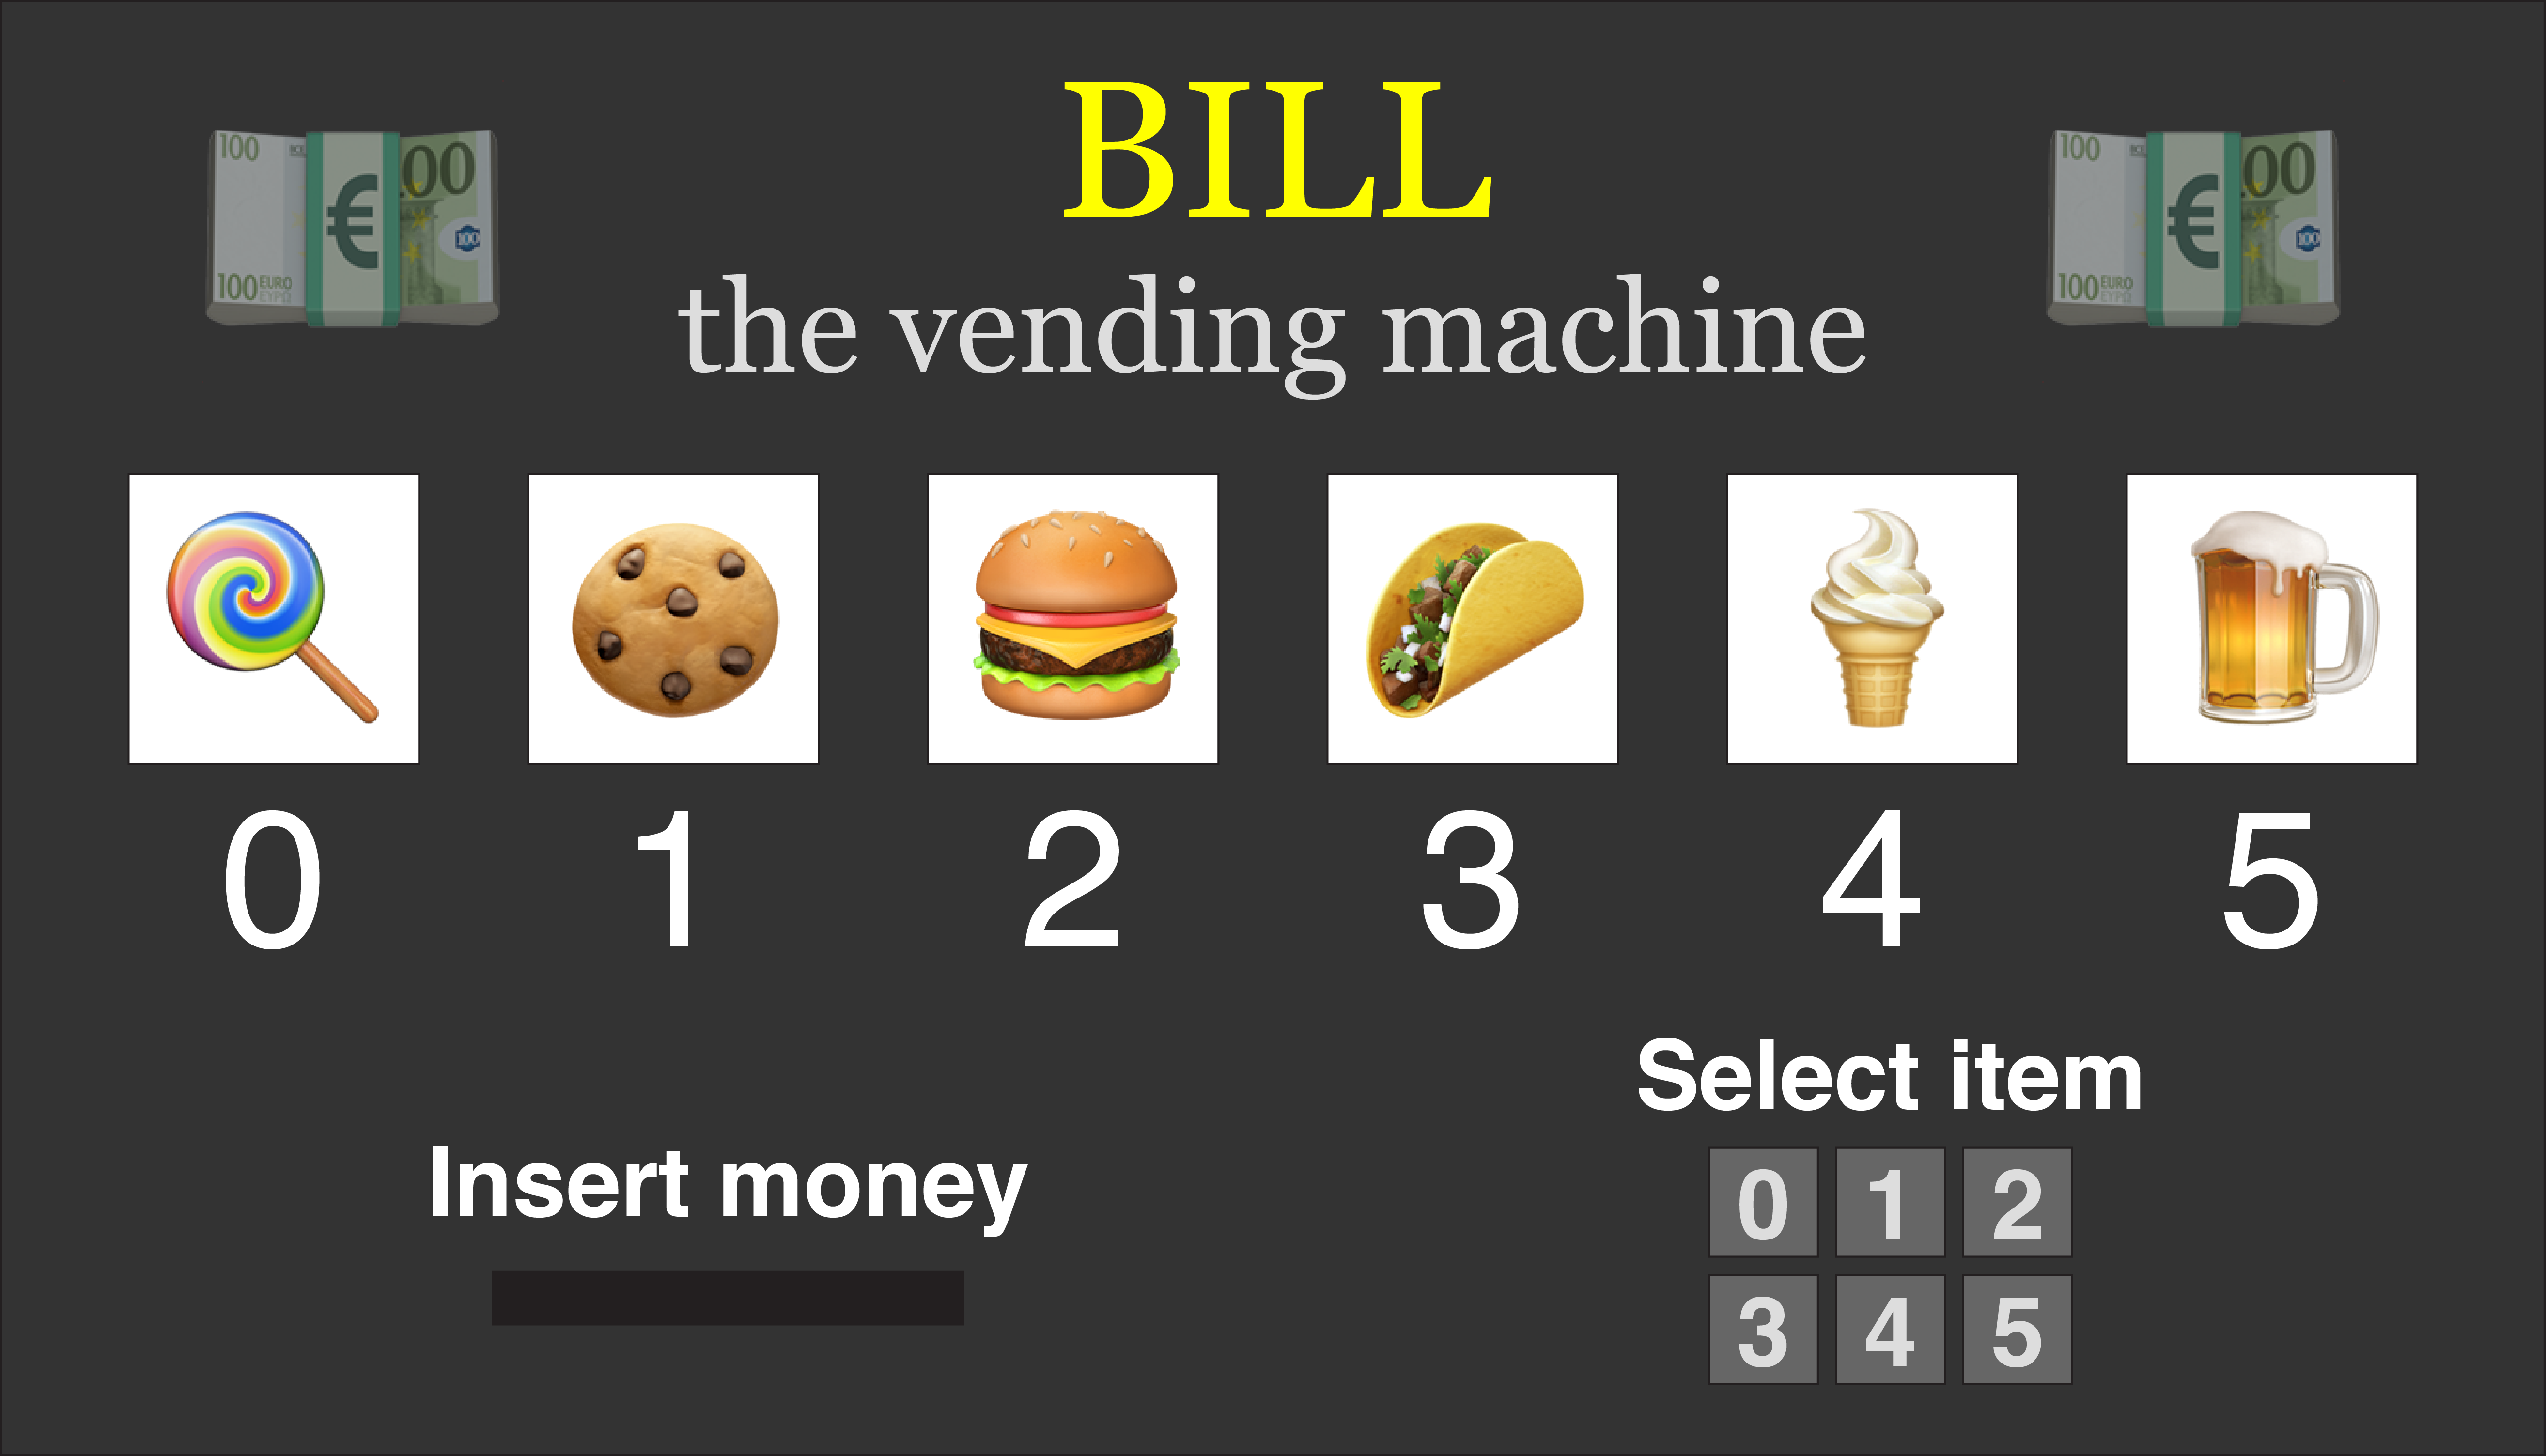 Bill the vending machine